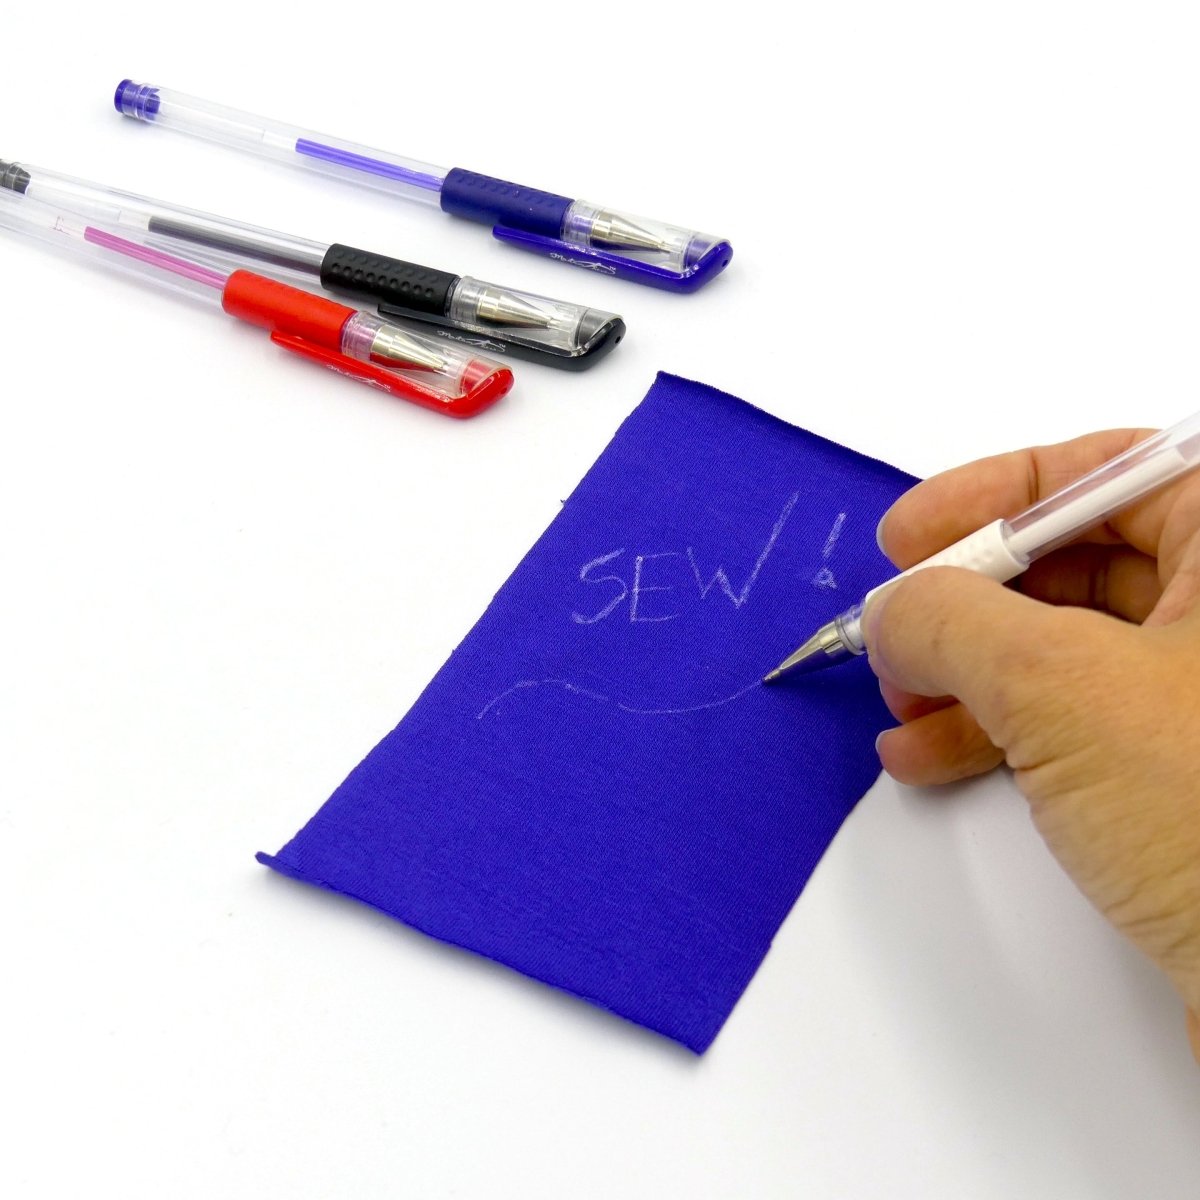 Heat Erasable Fabric Marking Pens MANUAL